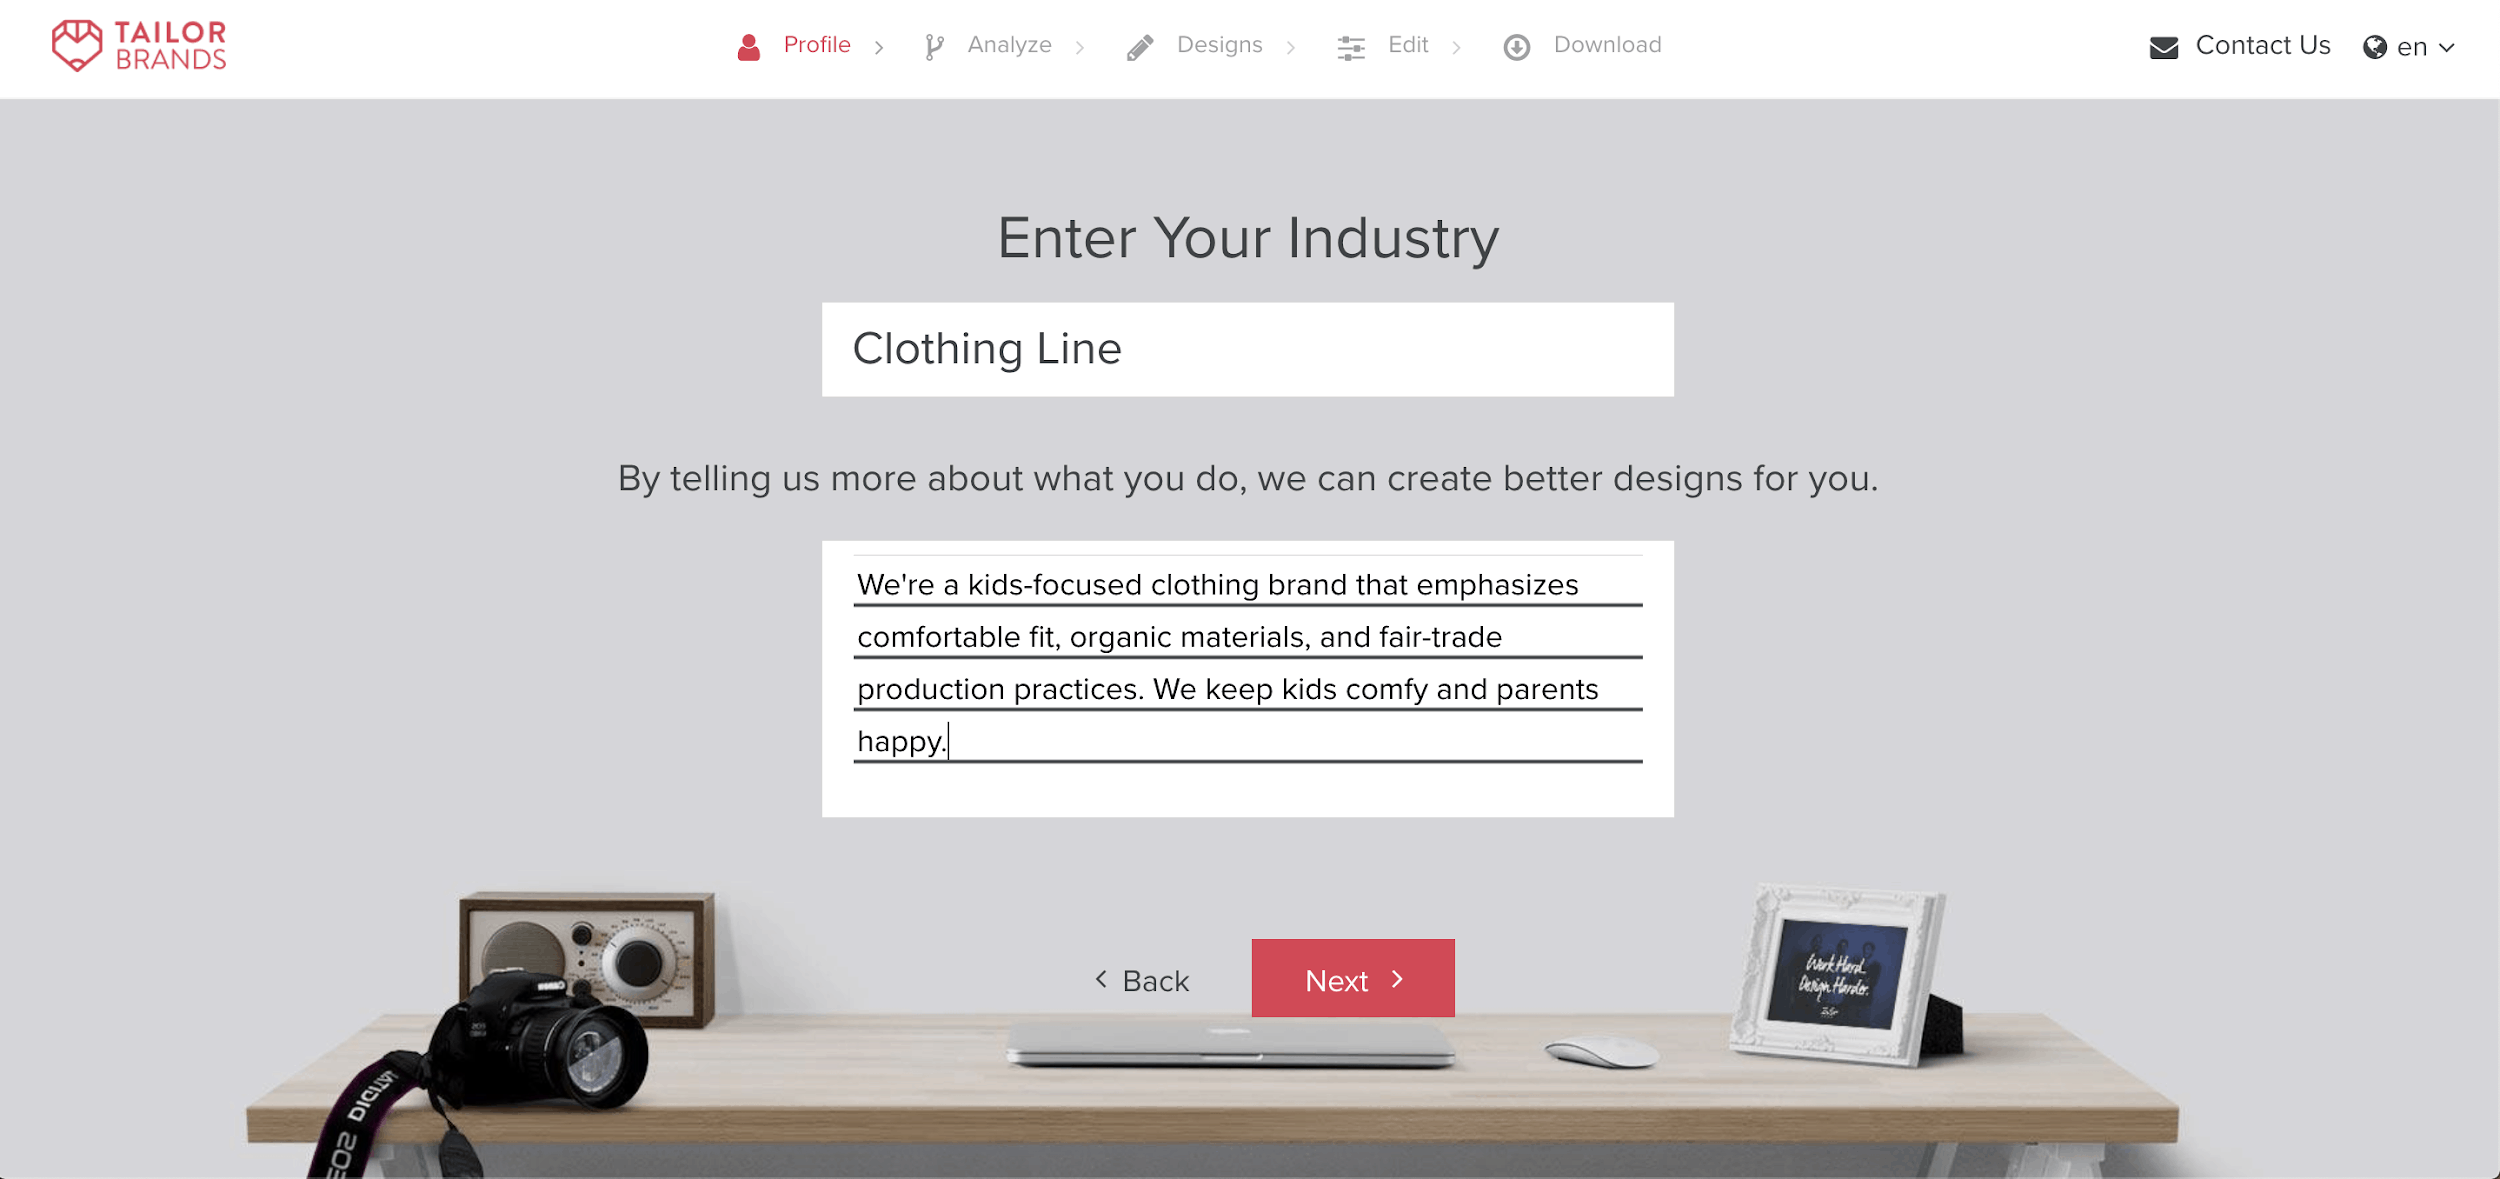 Tailor Brands screenshot - Enter Your Industry